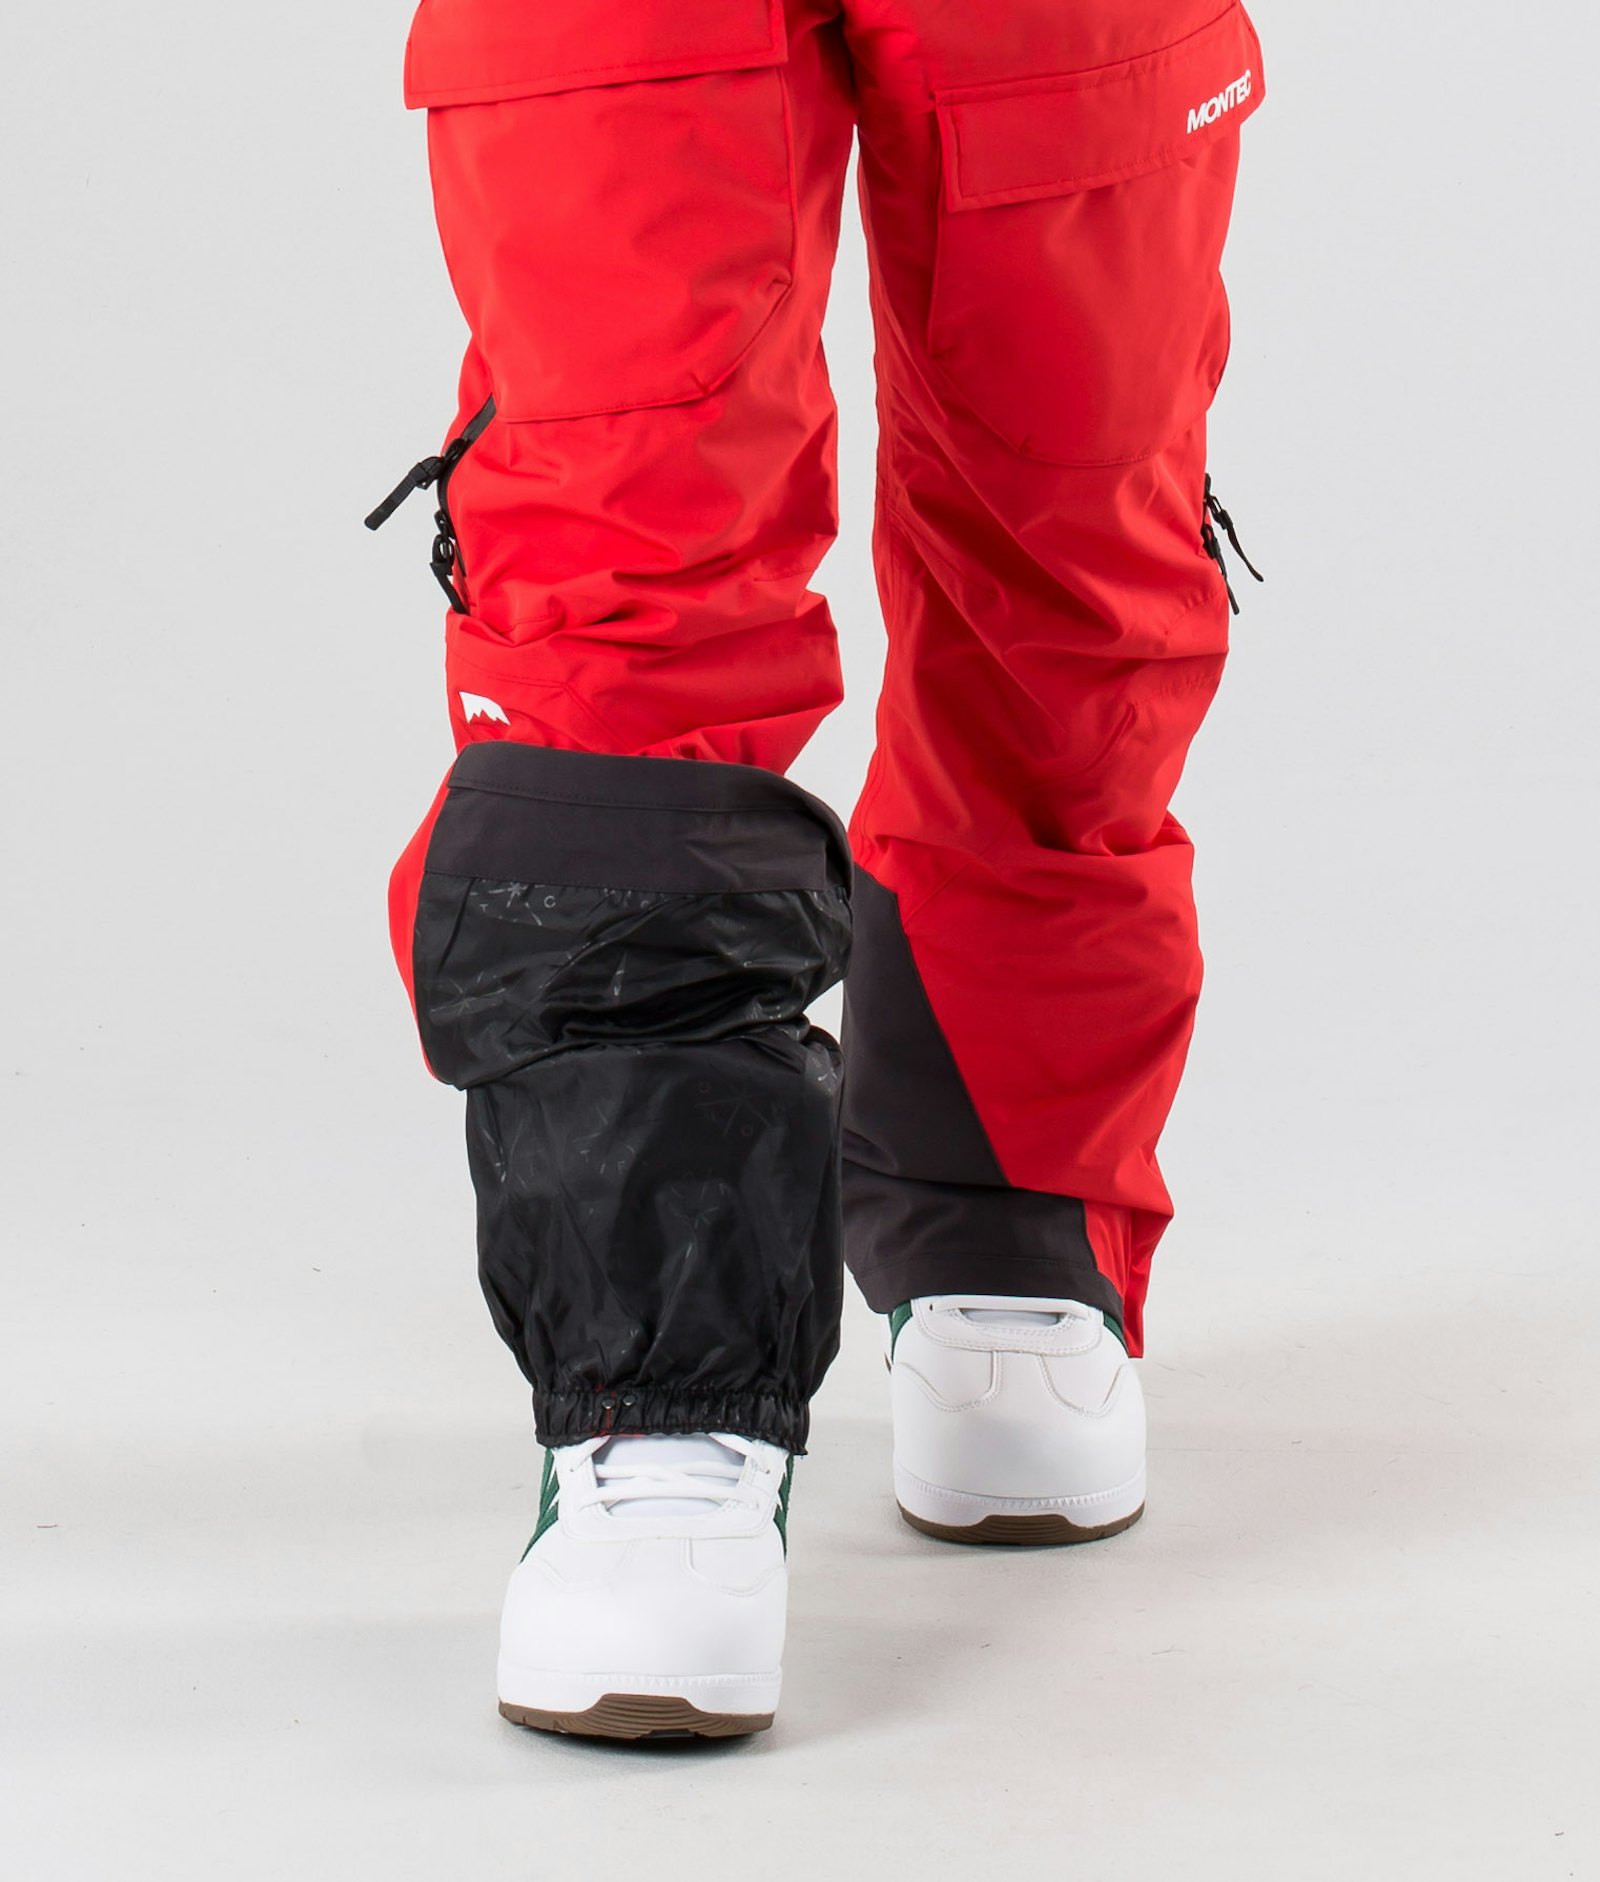 Fawk 2019 Snowboard Pants Men Red Renewed